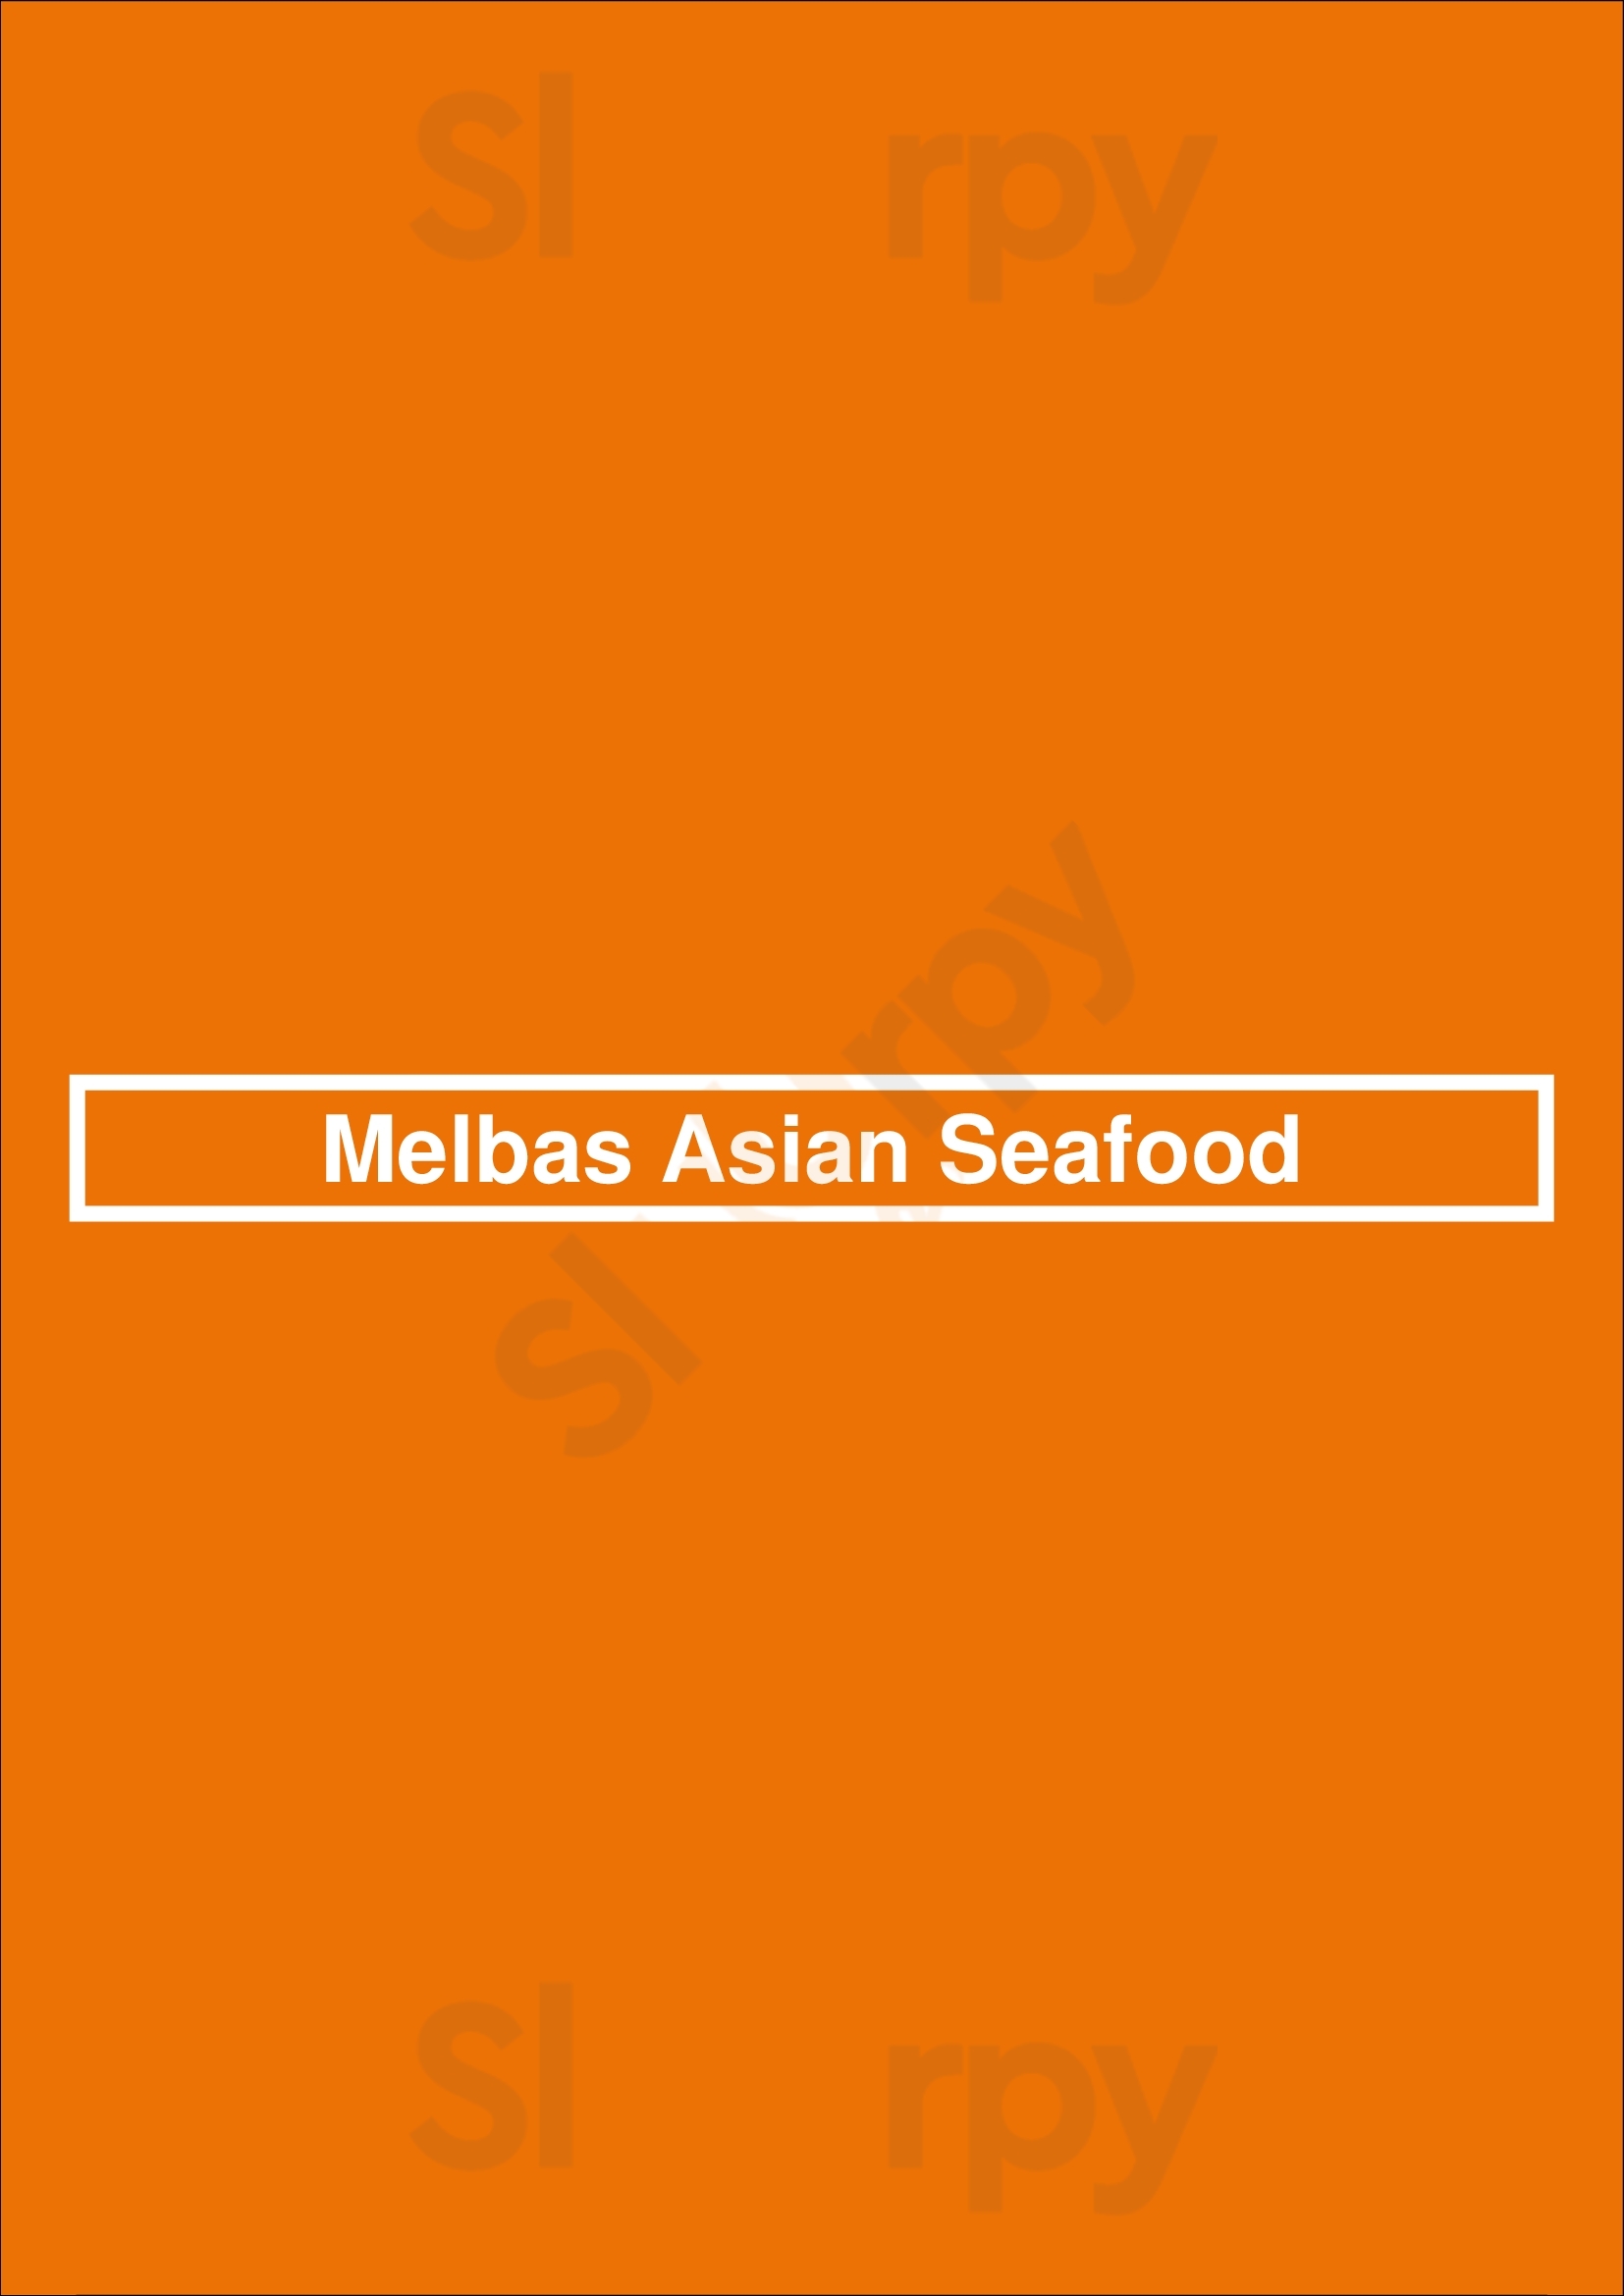 Melbas Asian Seafood Surfers Paradise Menu - 1